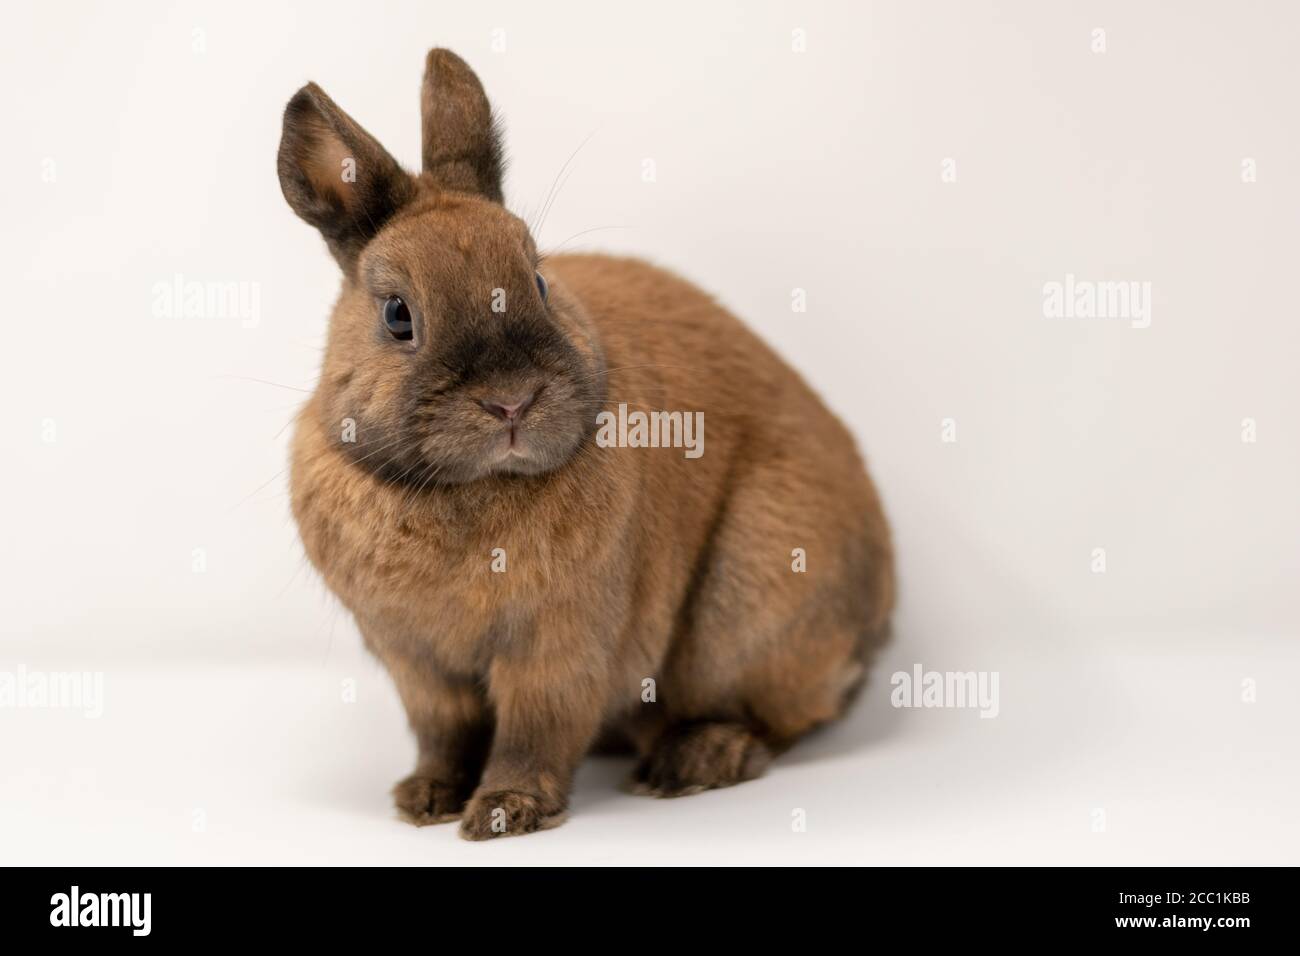 Gros plan d'un lapin nain brun Banque D'Images